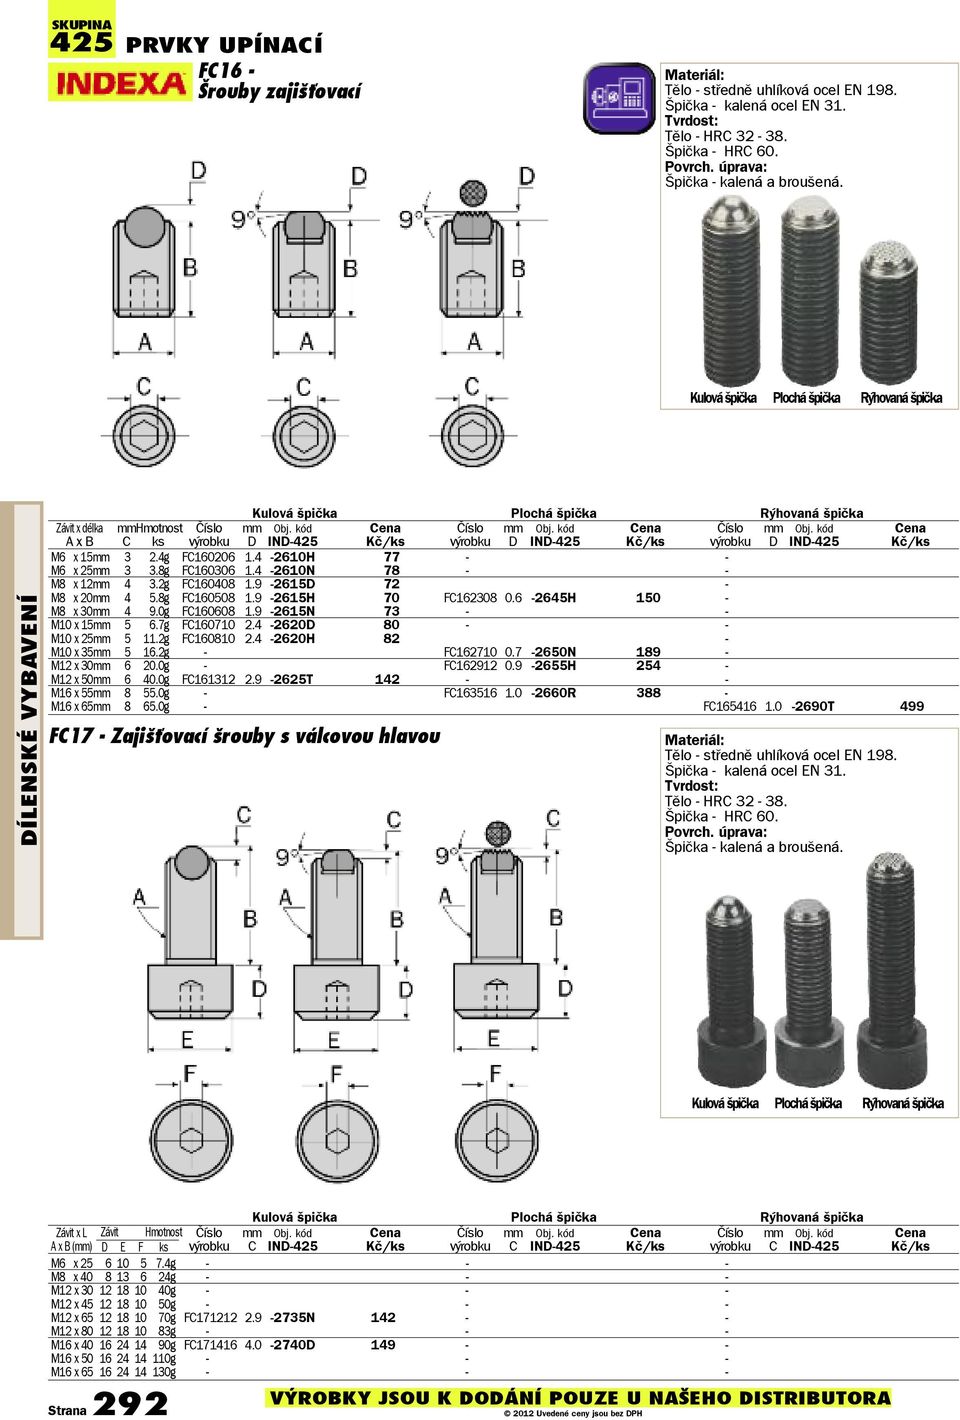 kód Èíslo mm Obj. kód A x B C ks výrobku D IND-425 výrobku D IND-425 výrobku D IND-425 M6 x 15mm 3 2.4g FC160206 1.4-2610H 77 - - M6 x 25mm 3 3.8g FC160306 1.4-2610N 78 - - M8 x 12mm 4 3.